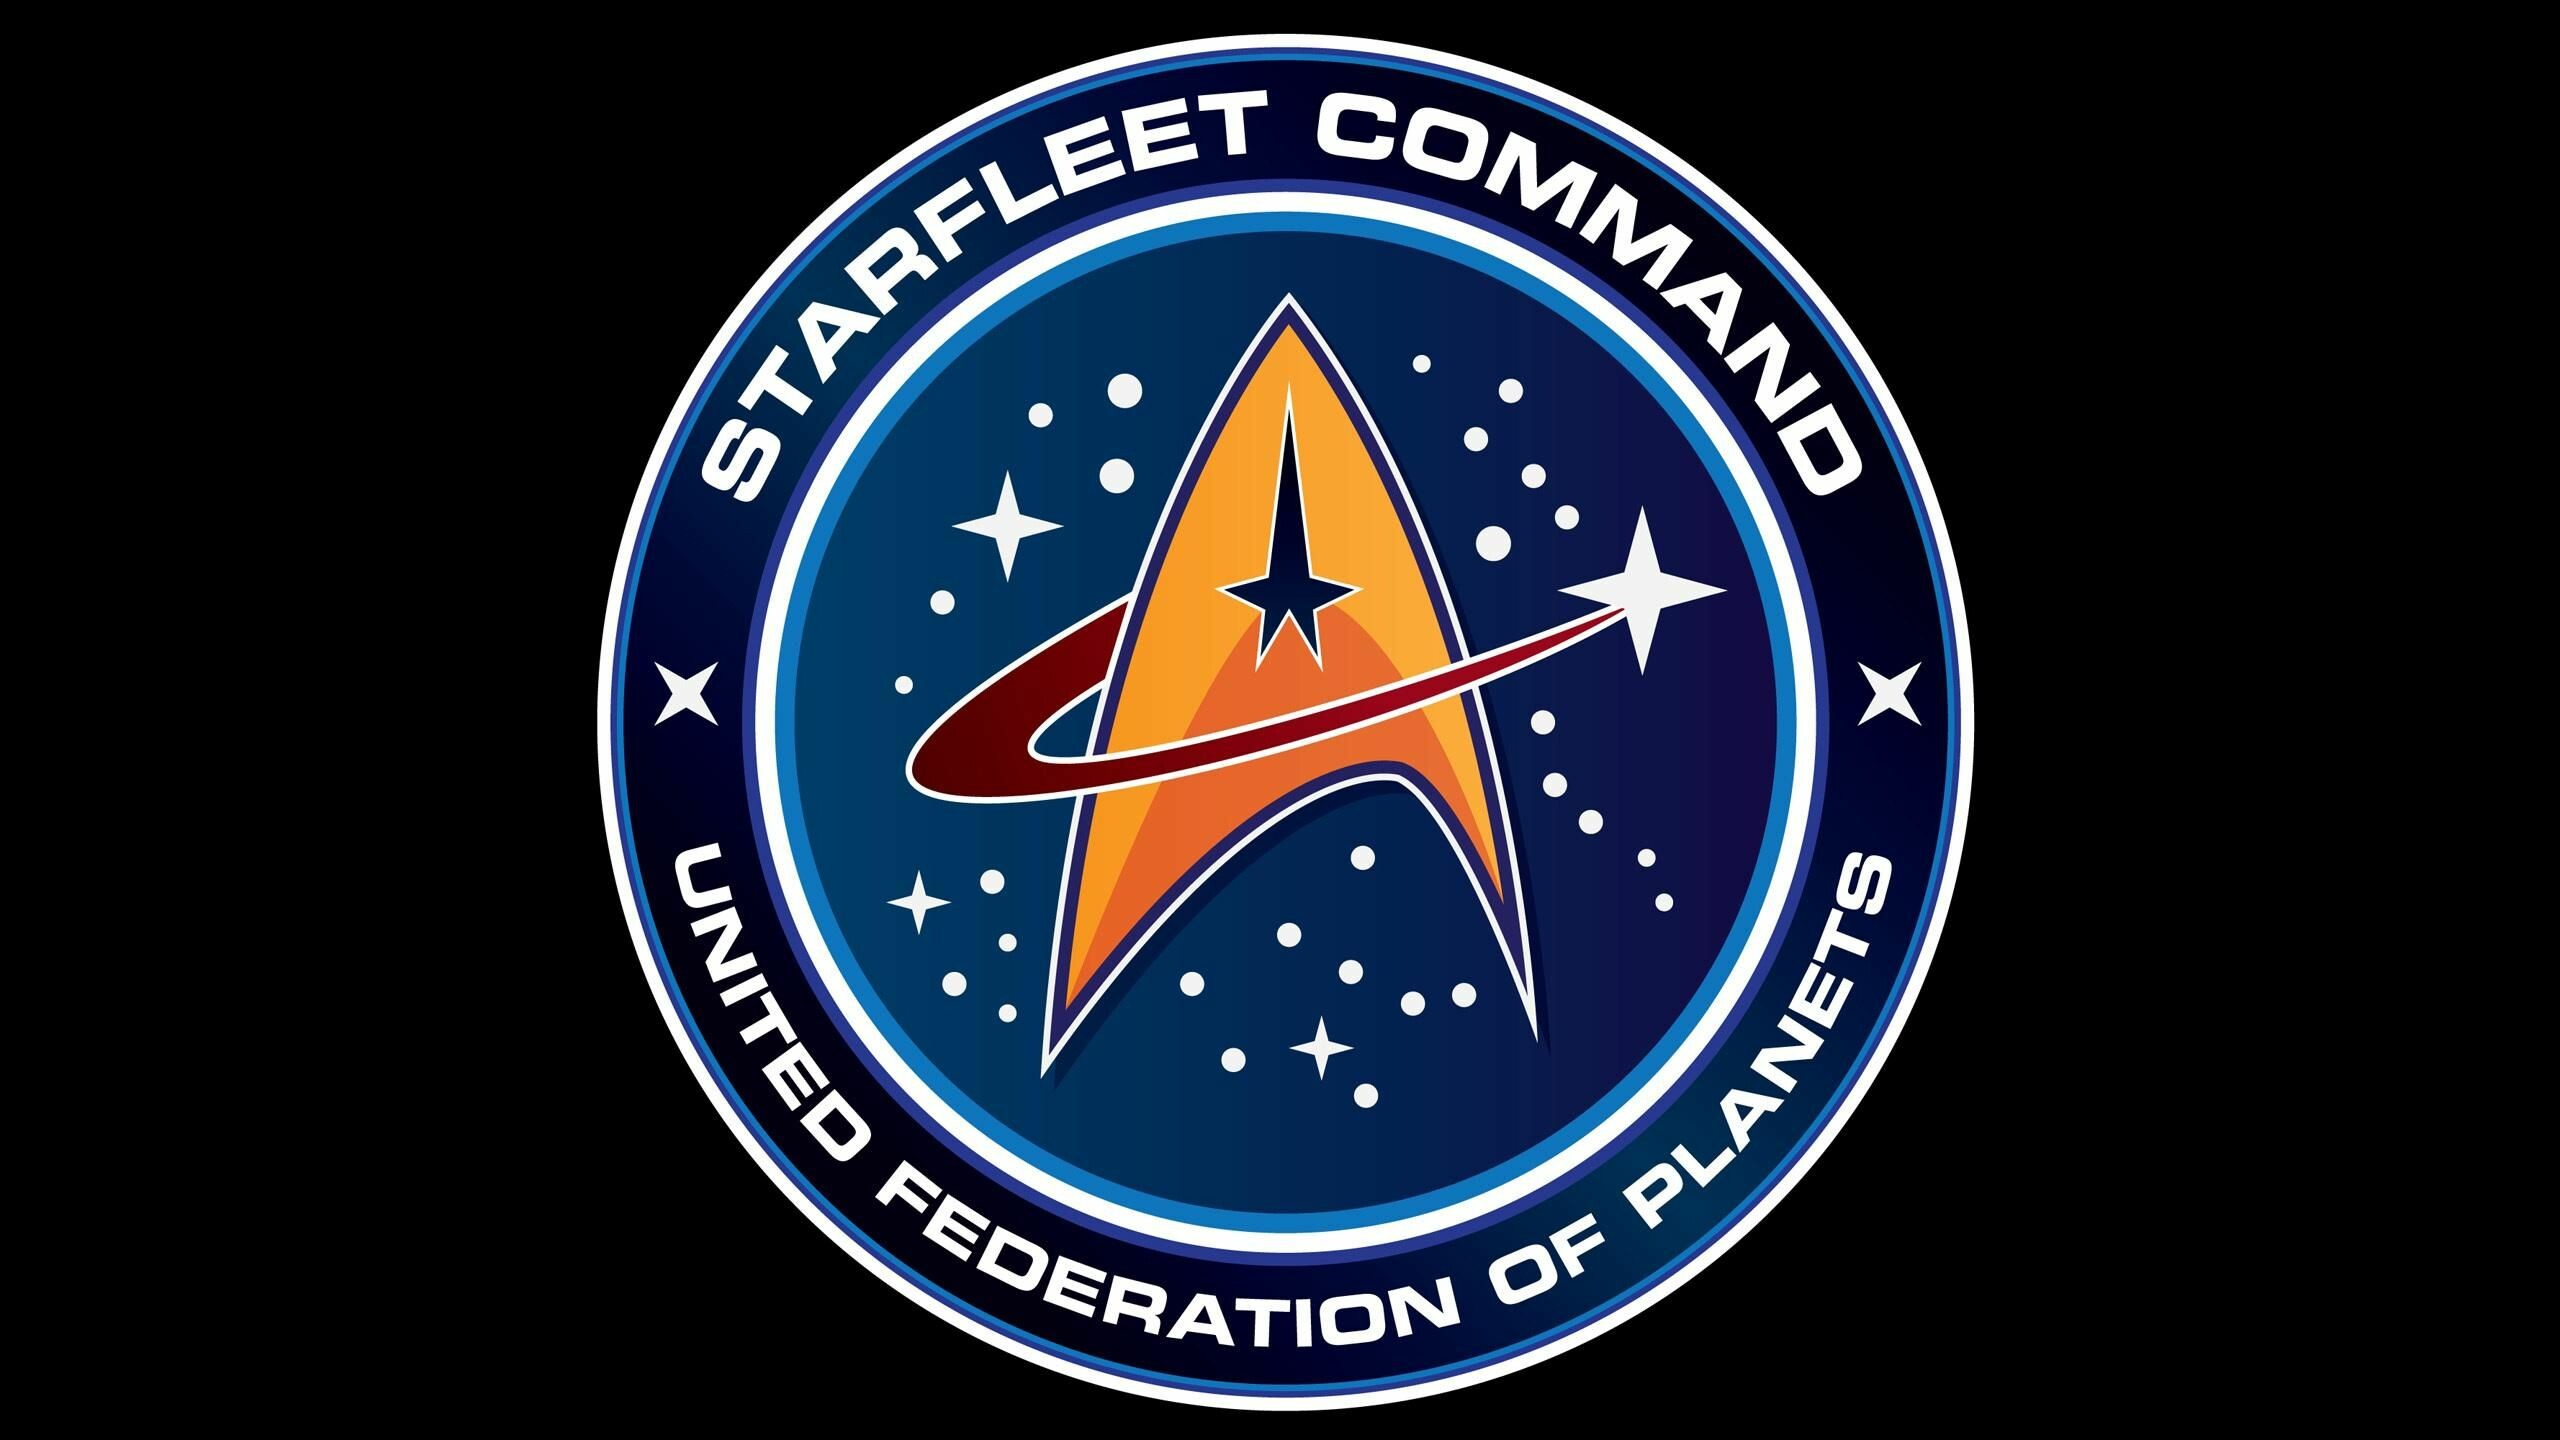 Star Trek: Original Star Trek Insignia, Starfleet Command. 2560x1440 HD Wallpaper.